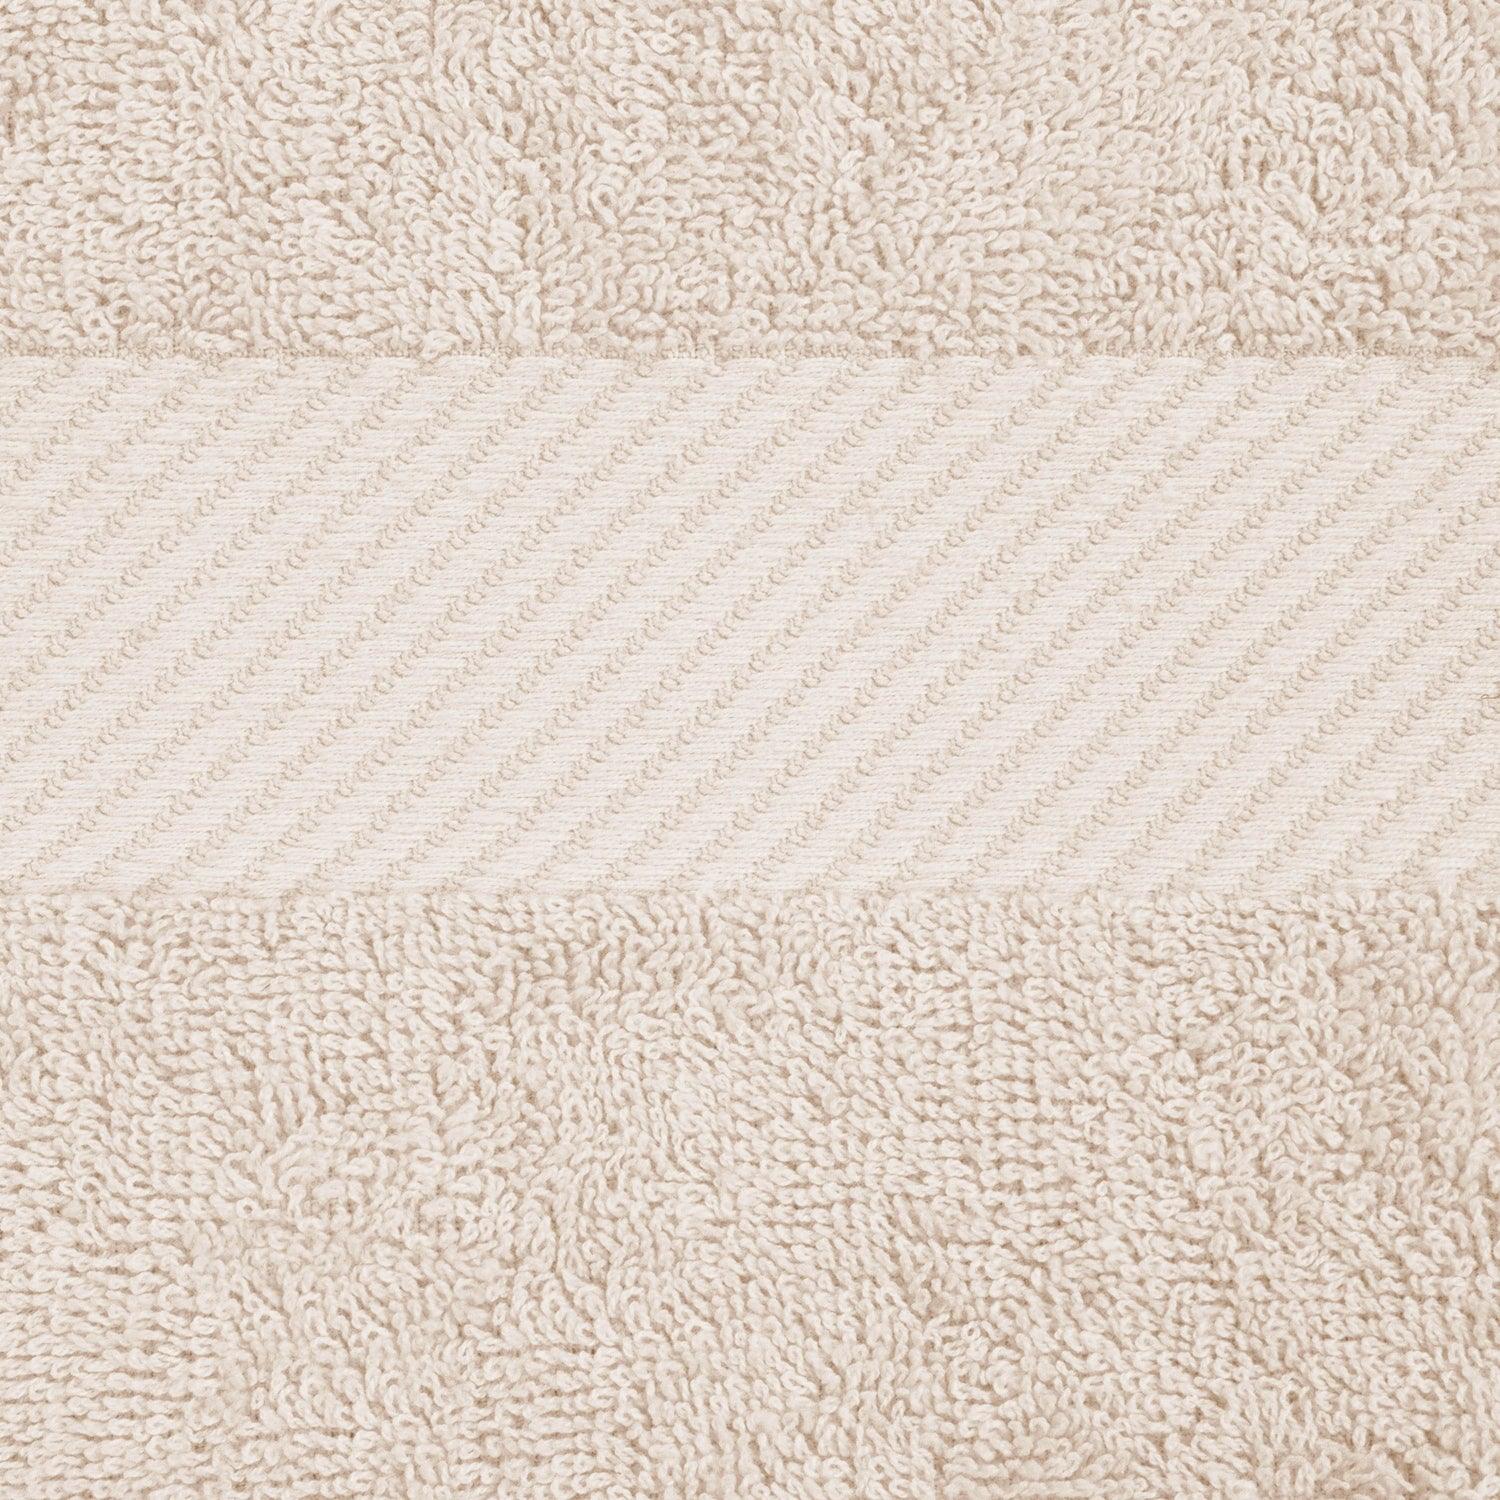 Egyptian Cotton Dobby Border Medium Weight 6 Piece Hand Towel Set - Ivory